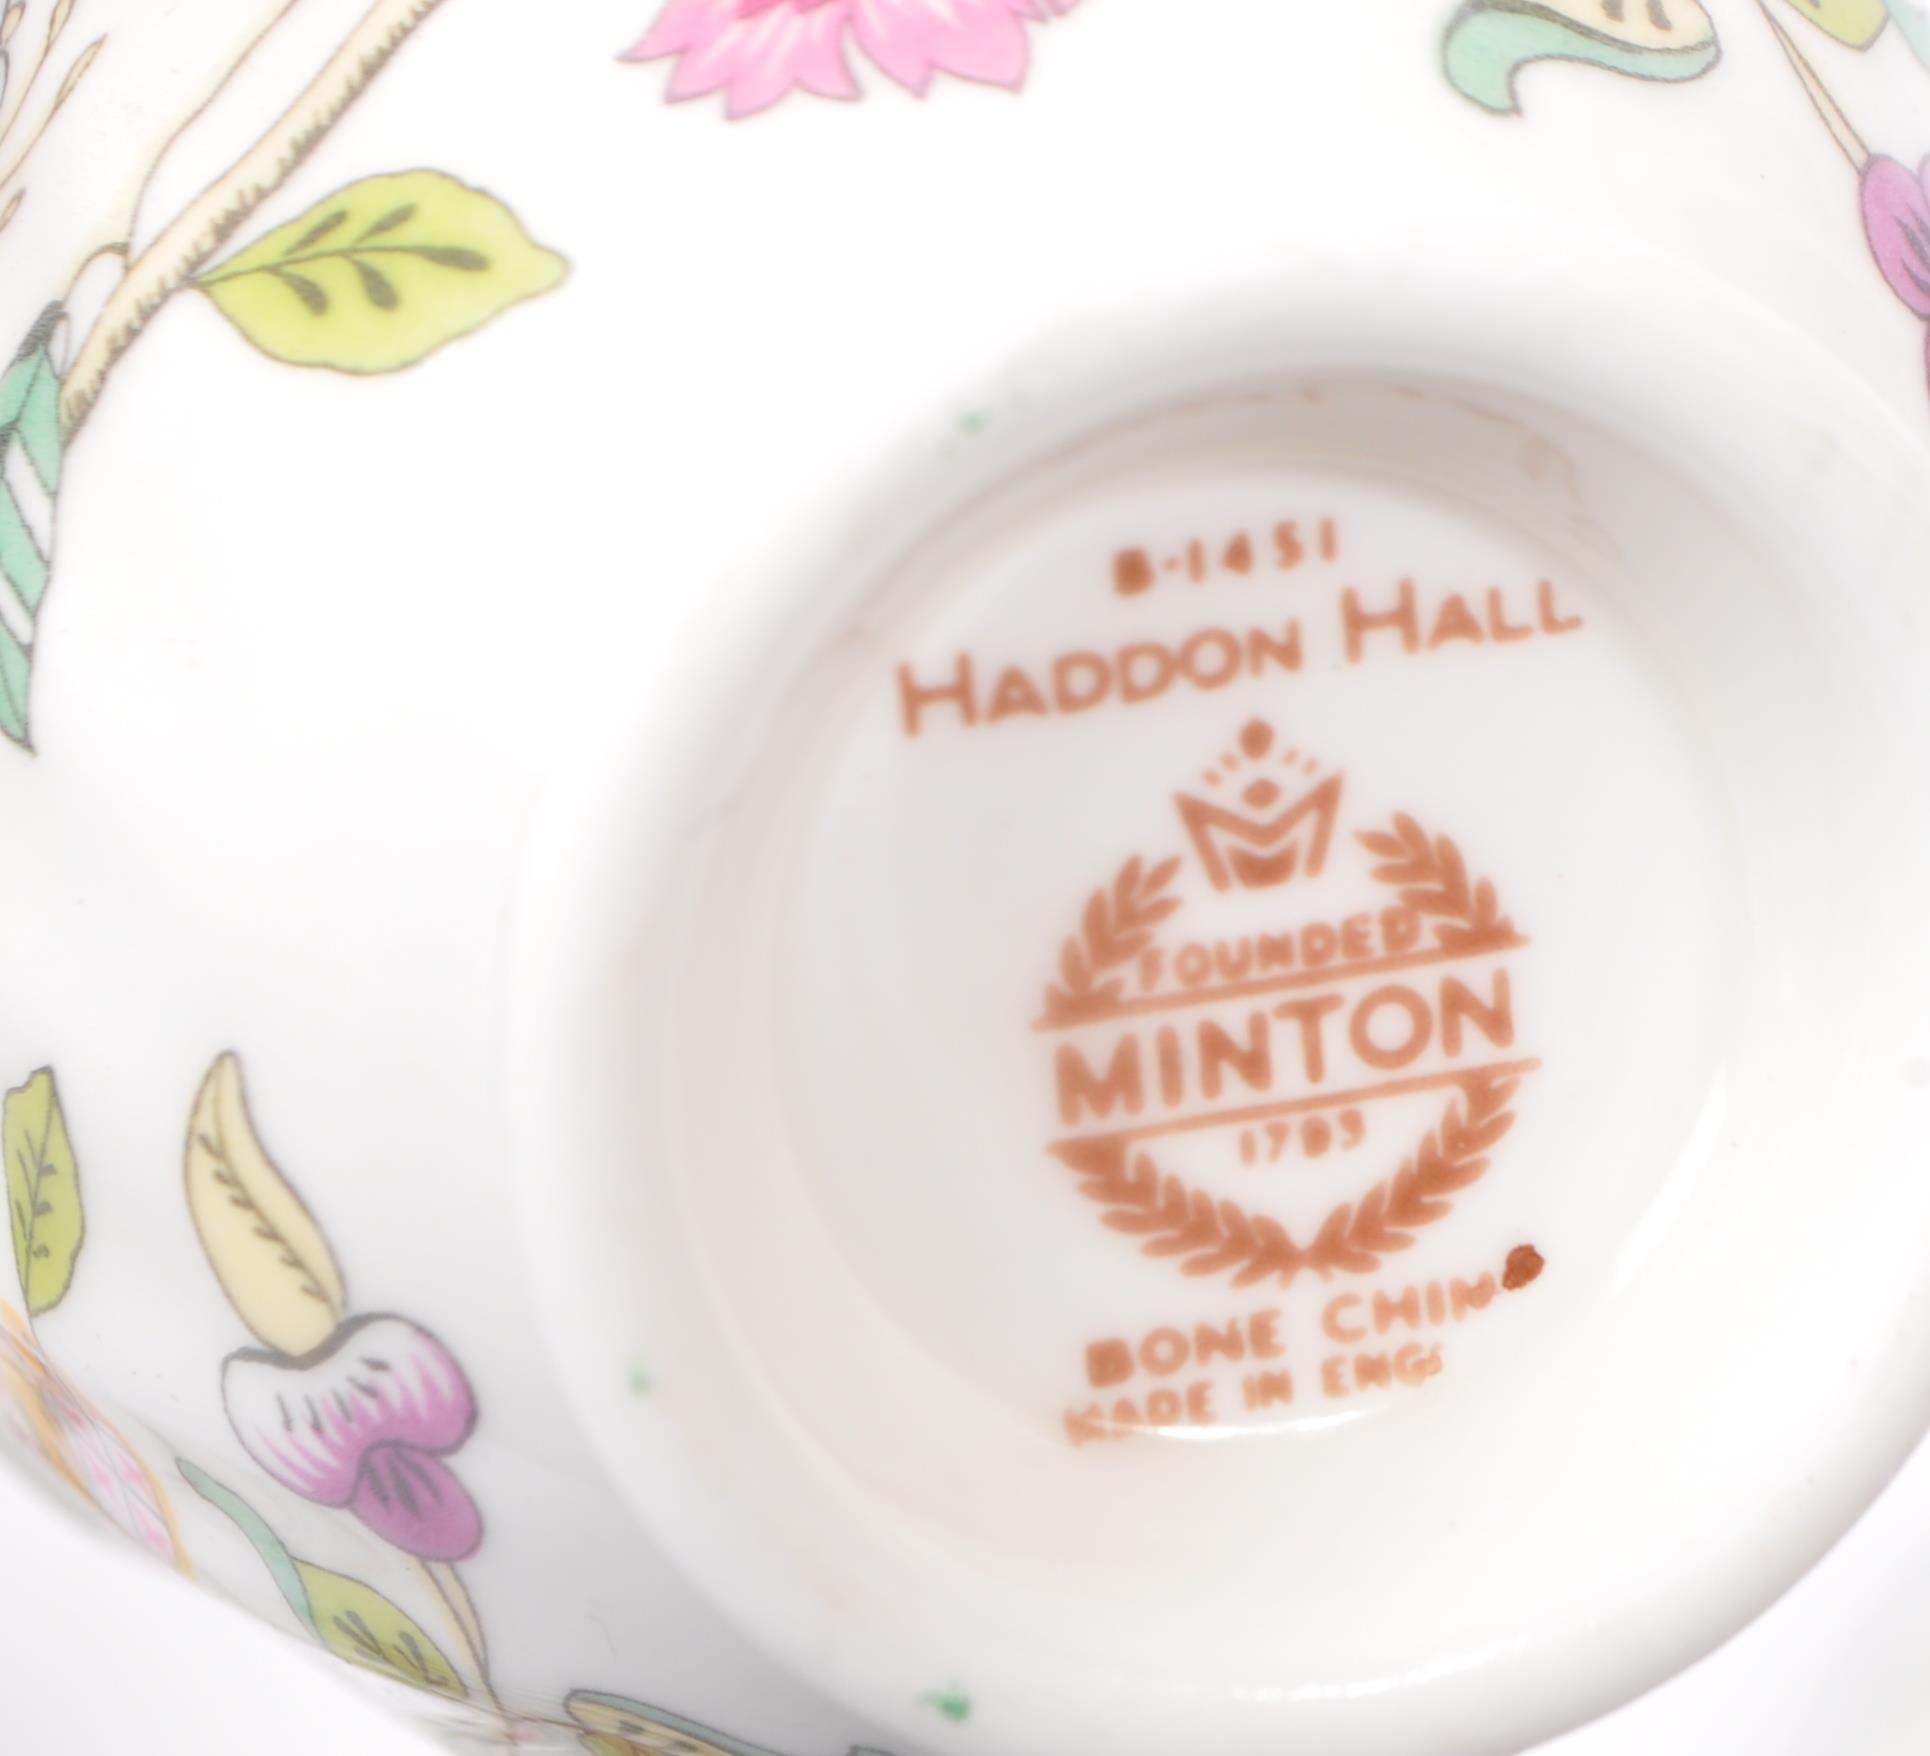 VINTAGE MINTON HADDON HALL BONE CHINA TEA SERVICE - Image 5 of 5